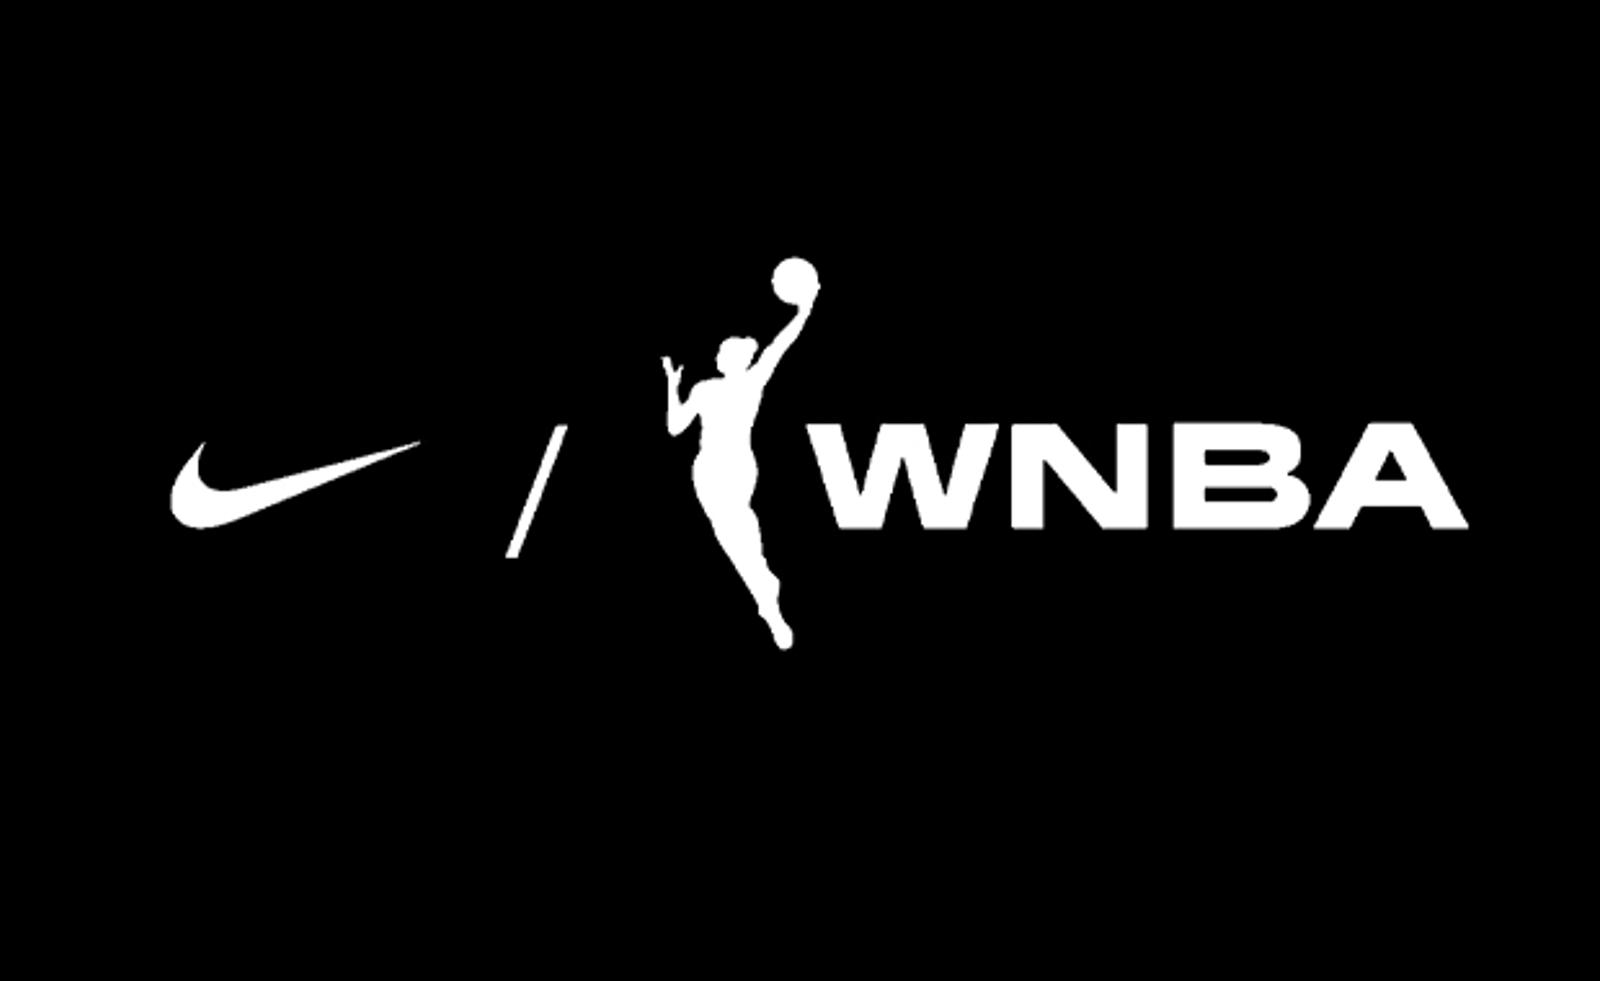 WNBA and Nike Logo